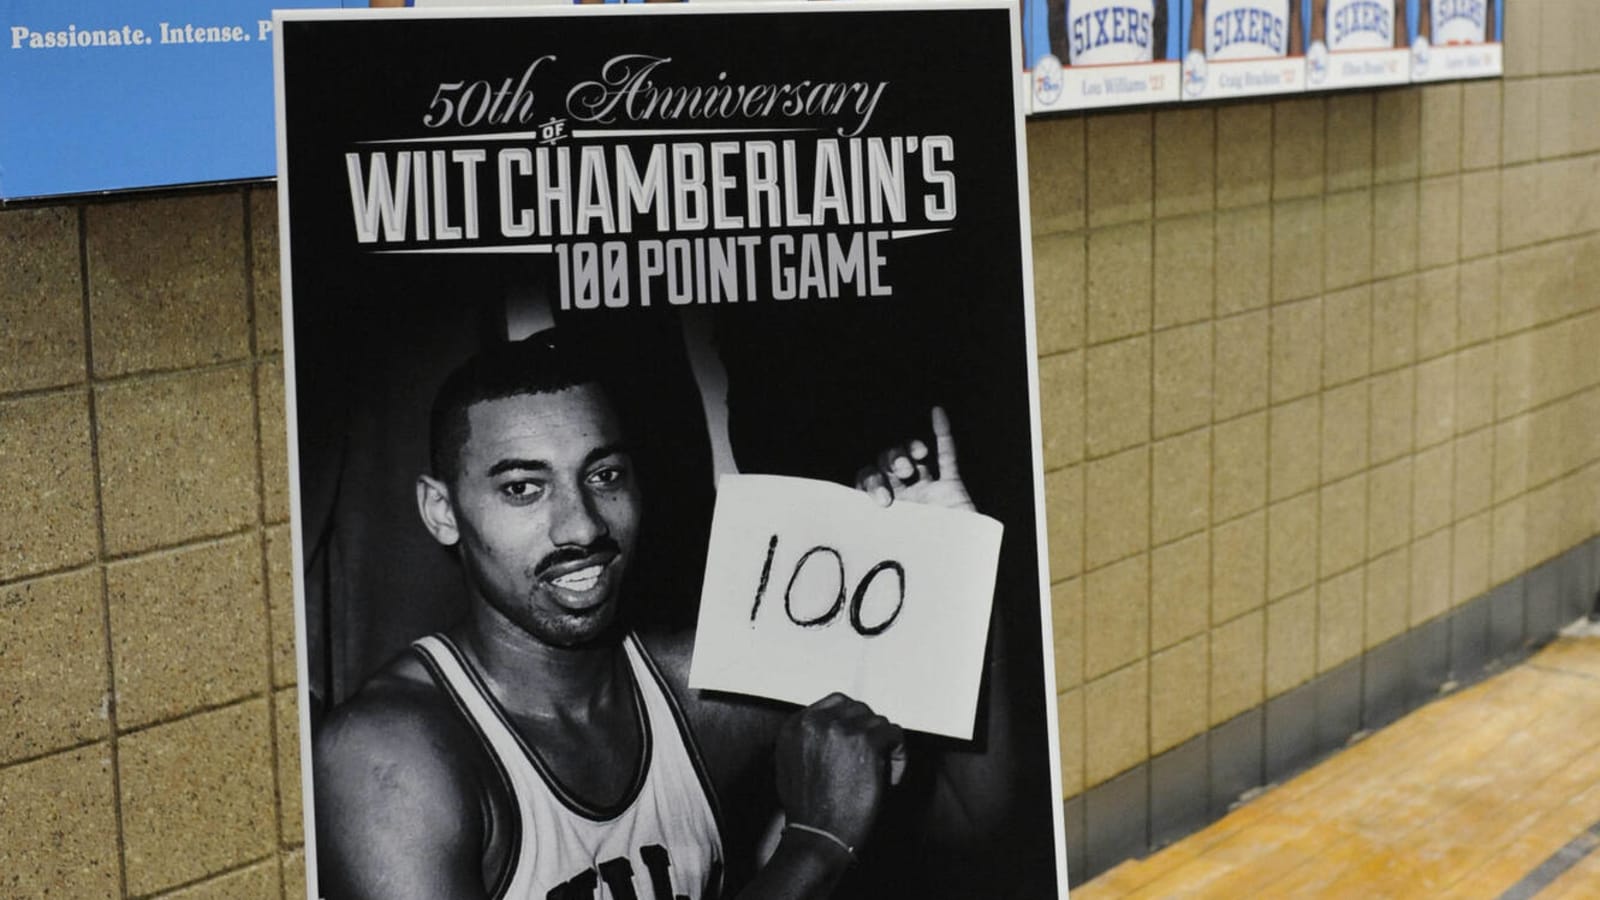 Wilt Chamberlain 1972 NBA Finals Game 5 'Championship Clinching